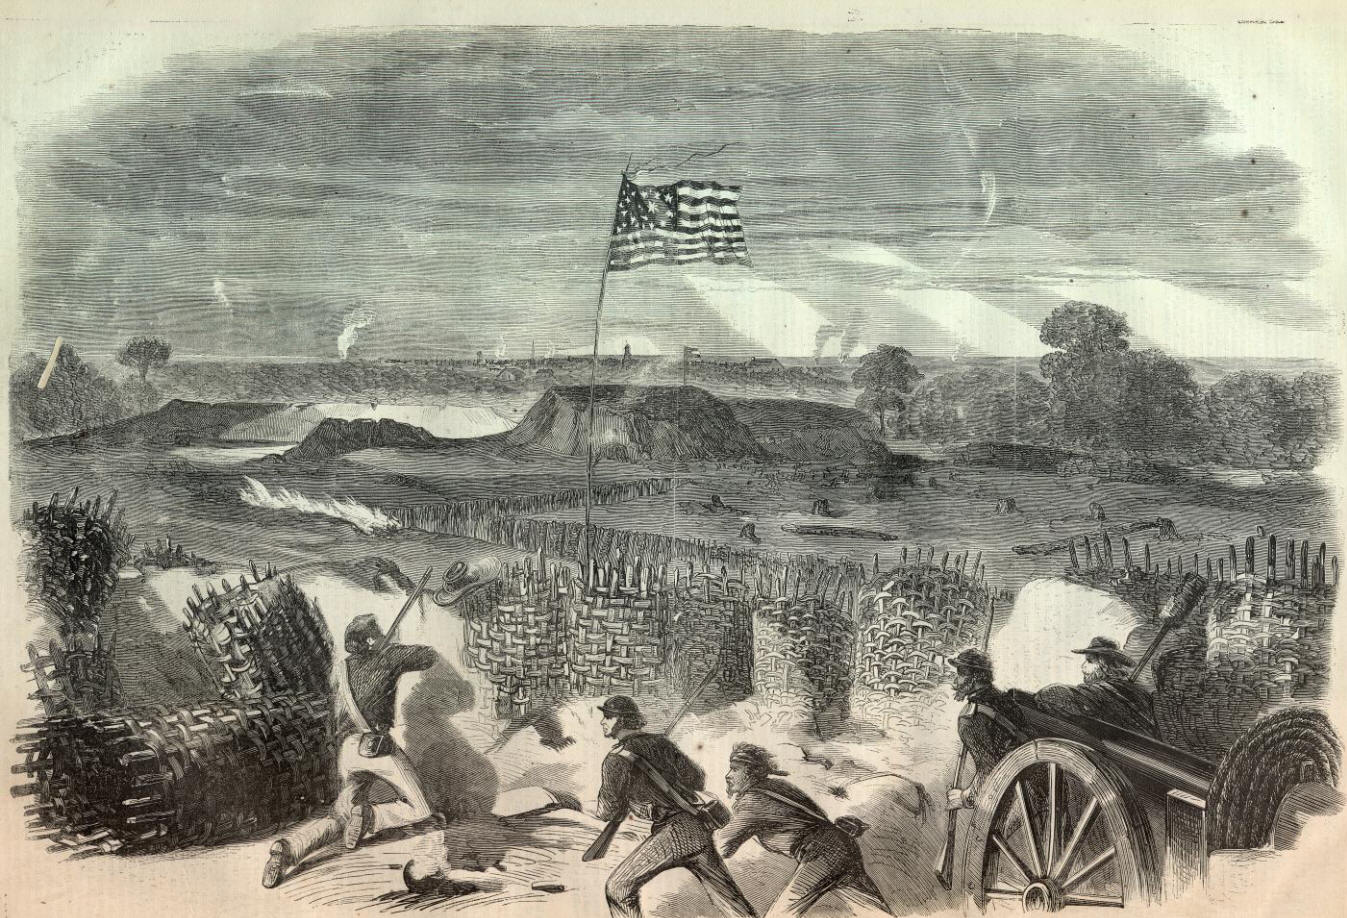 during the civil war, the union navy vicksburg